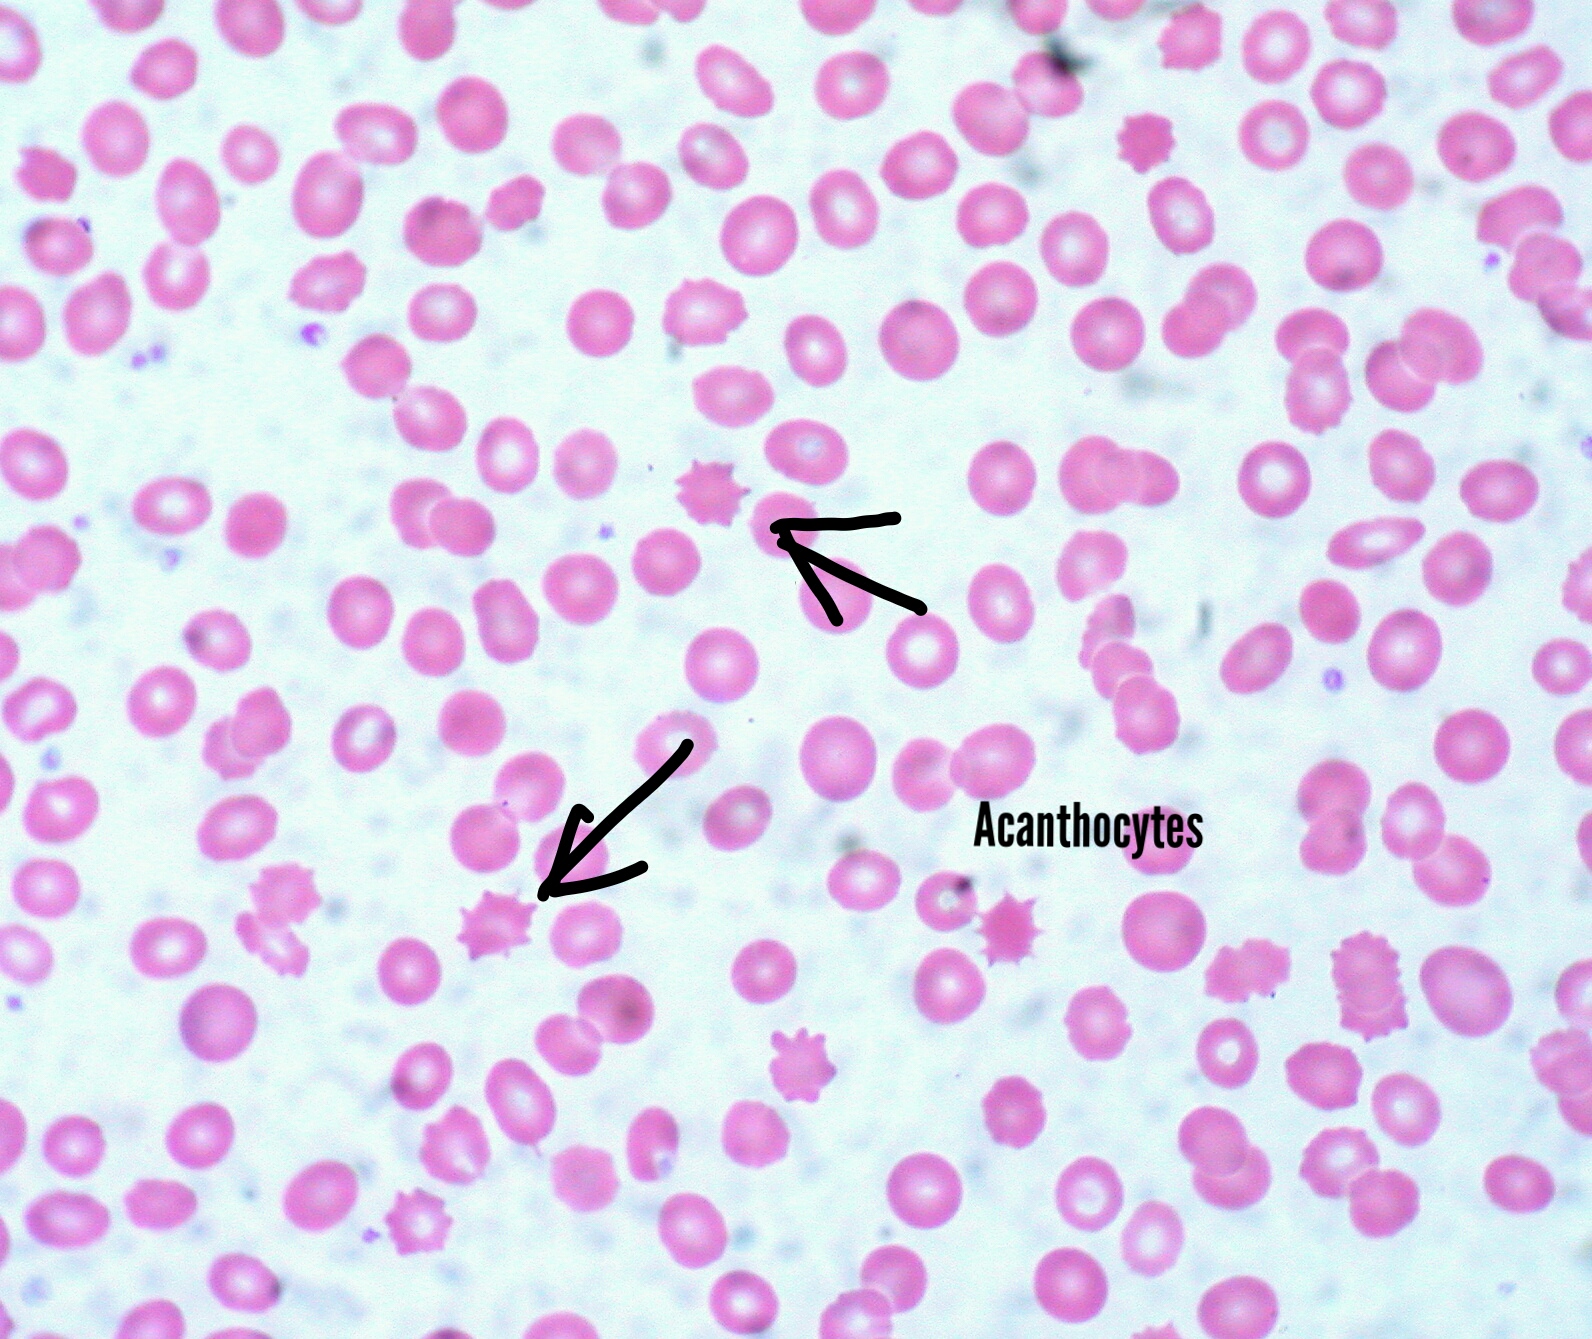 Acanthocytes found in the peripheral blood smear of abetalolipoproteinemia patients.